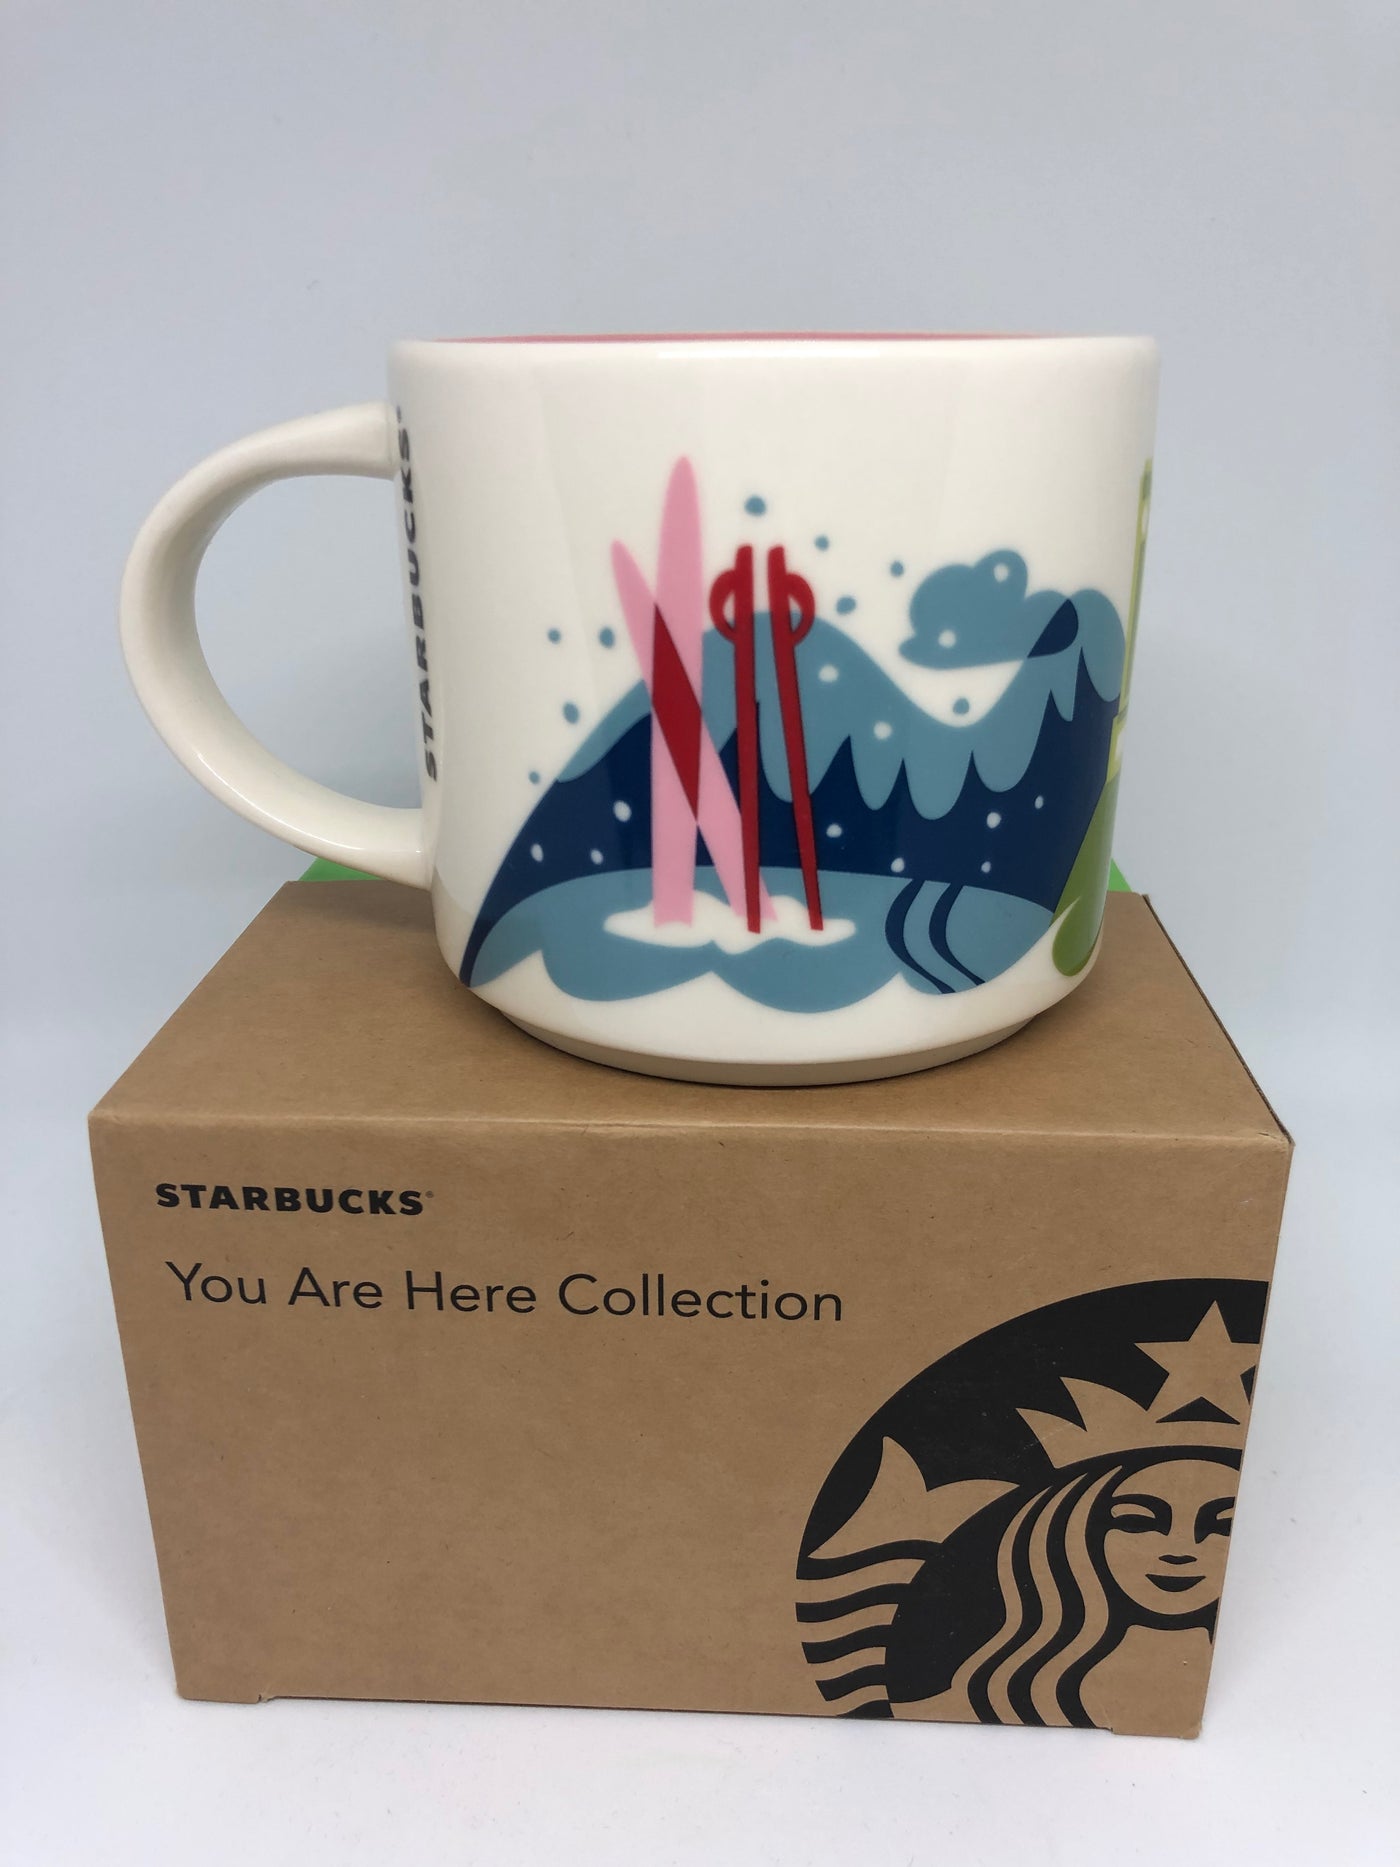 Starbucks You Are Here Lebanon Ceramic Coffee Mug New with Box